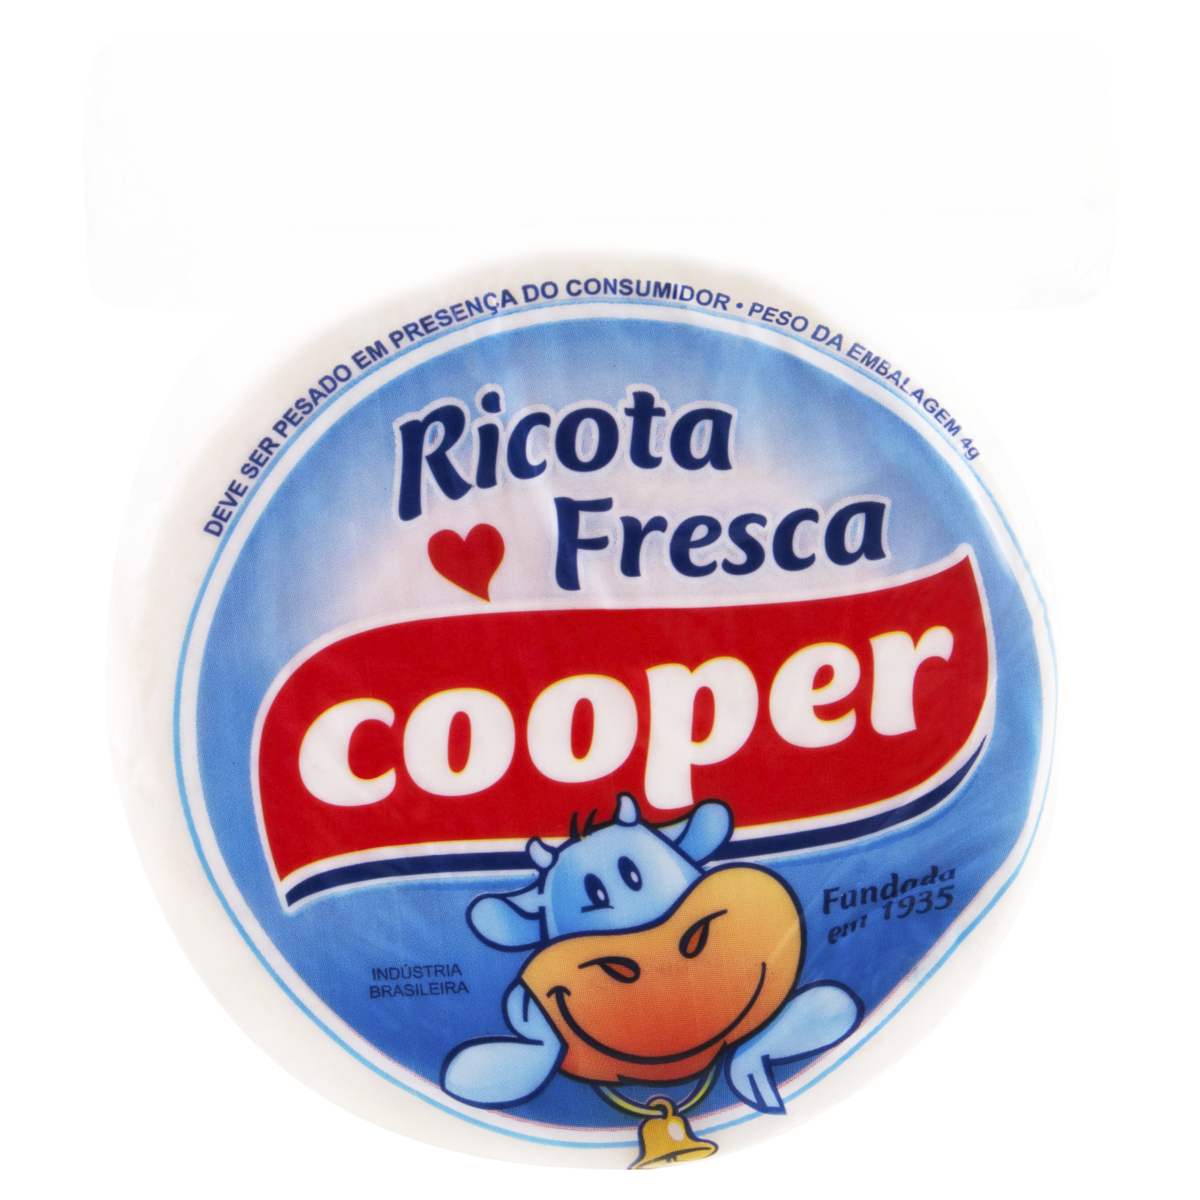 7896598300119 - RICOTA FRESCA COOPER